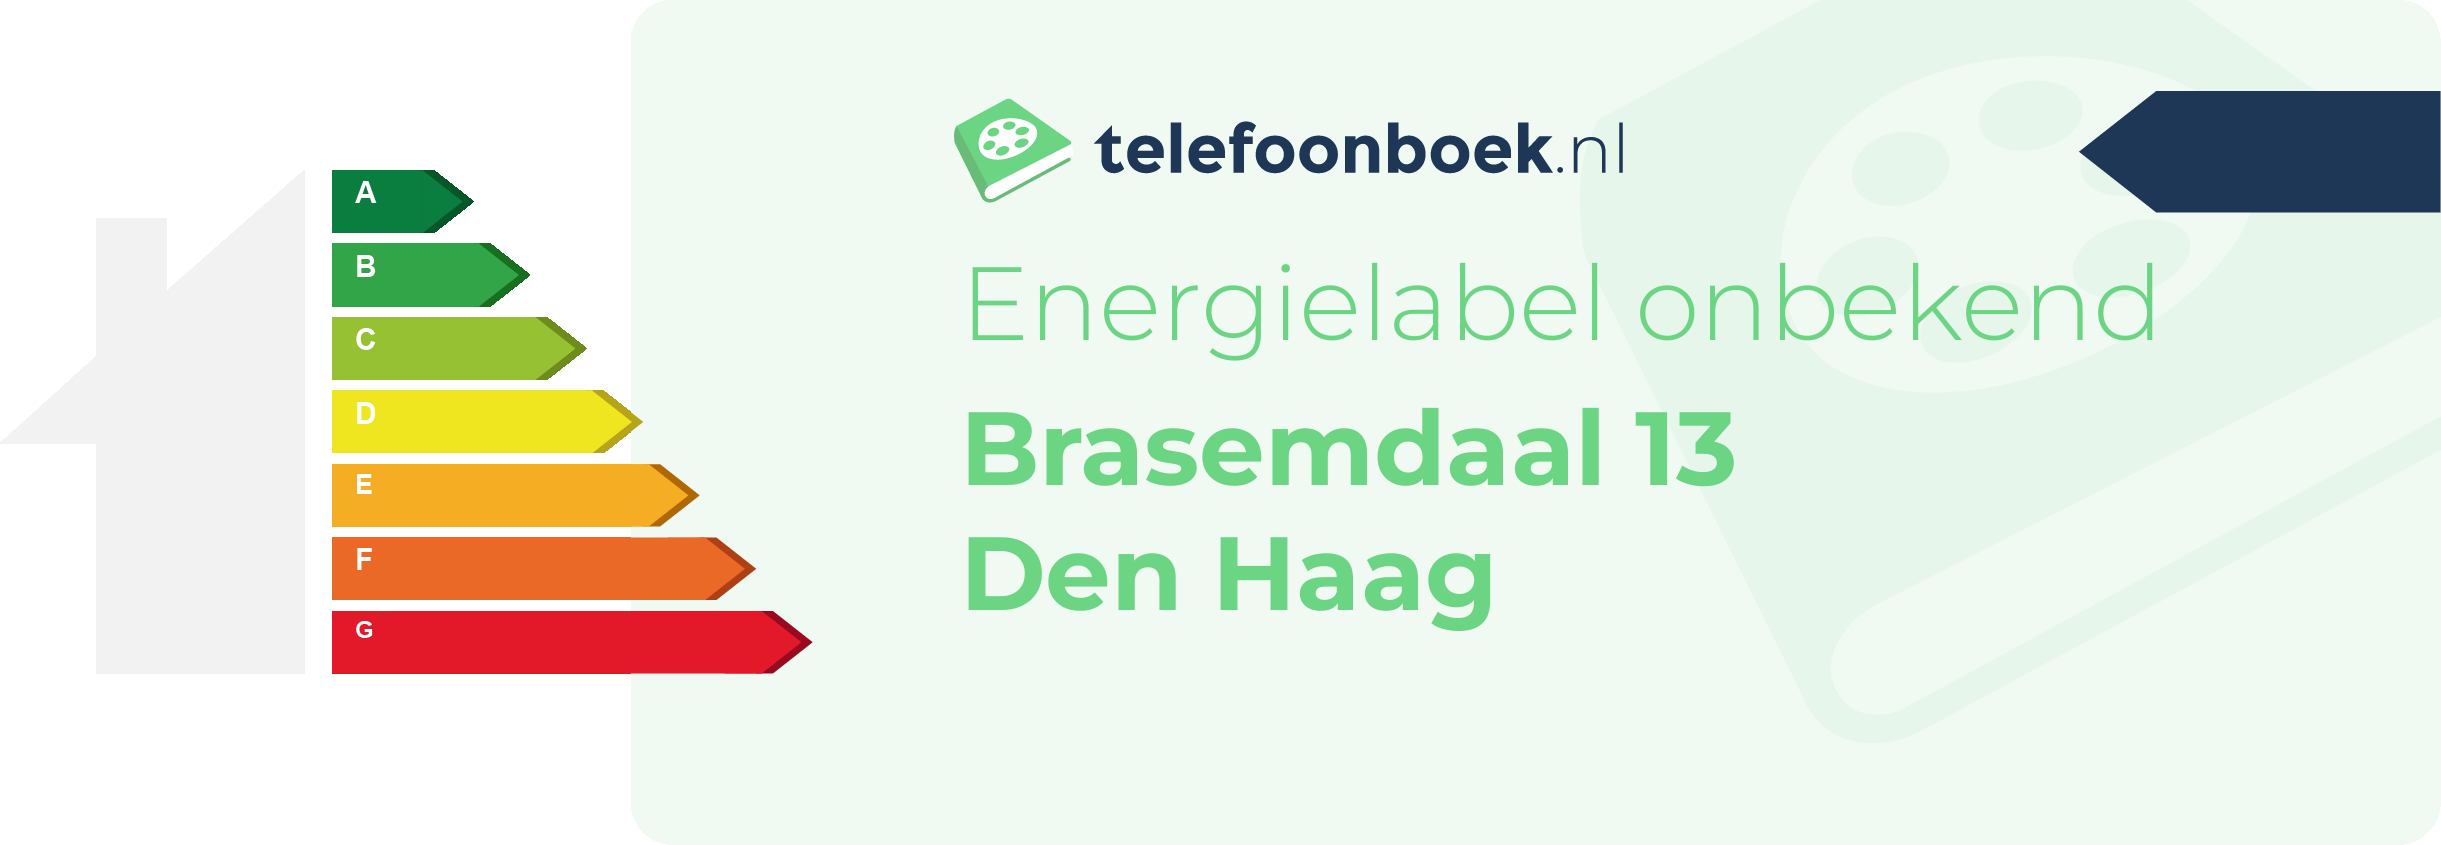 Energielabel Brasemdaal 13 Den Haag